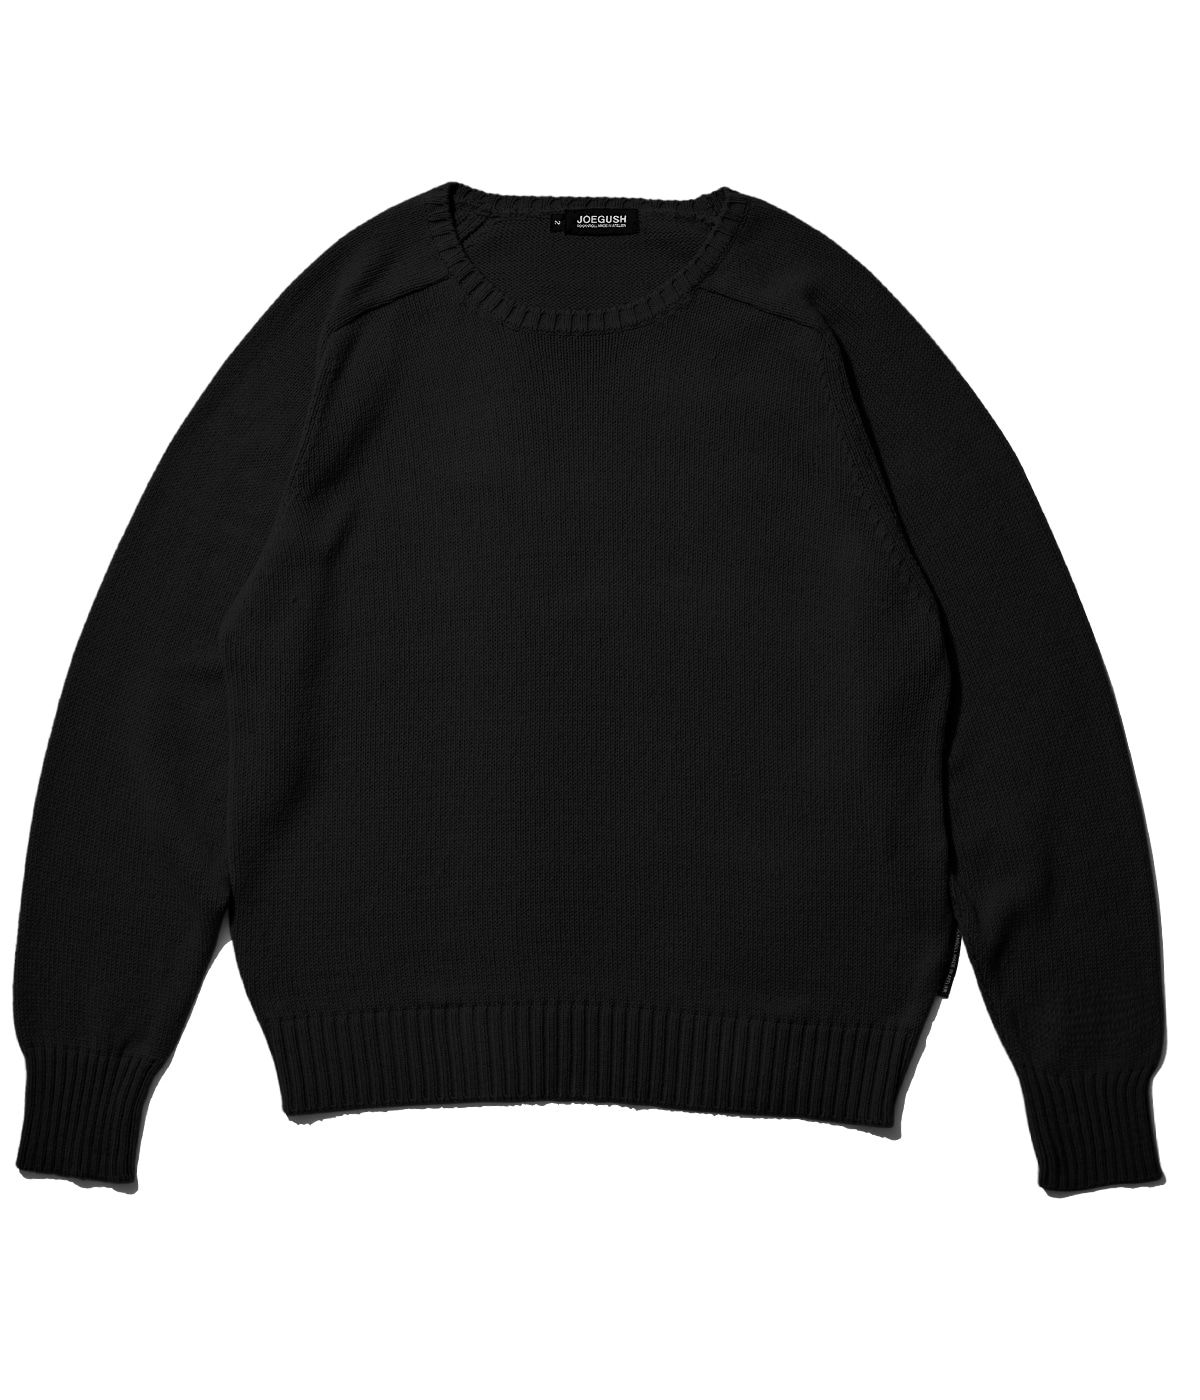 Single pullover knit Lv.1 (Black)